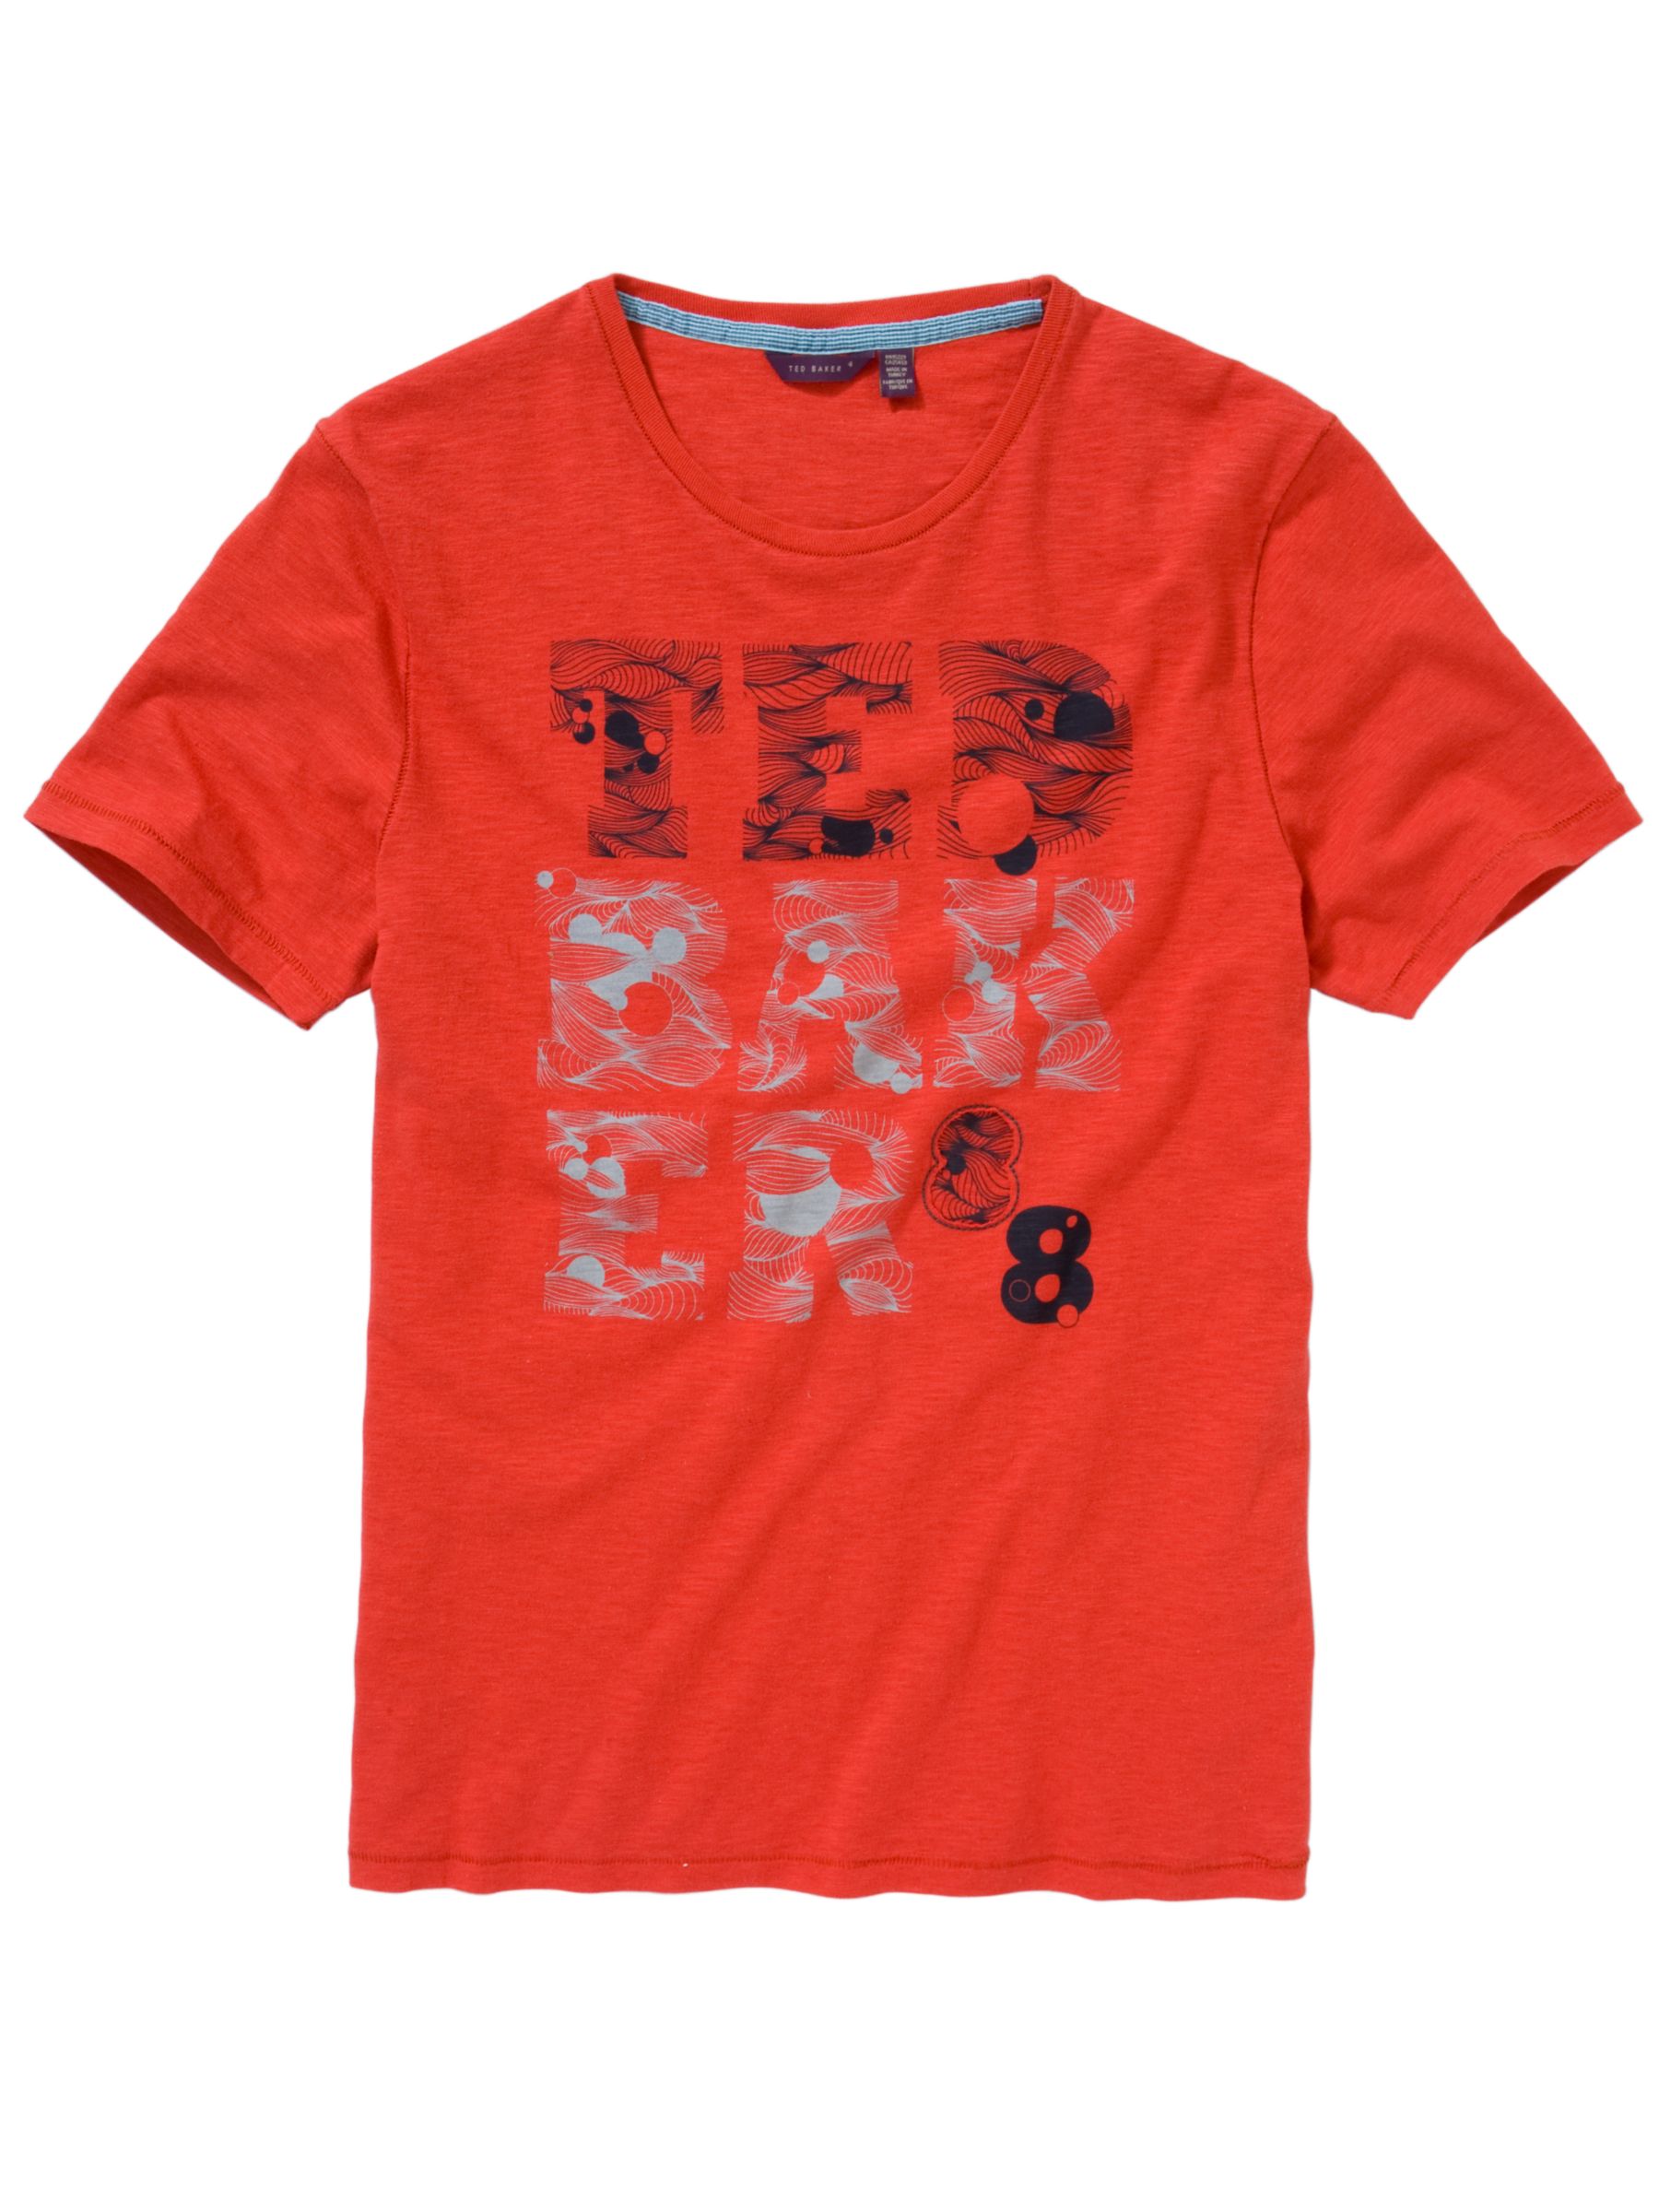 Ted Baker Swirl Brand T-Shirt, Red, L